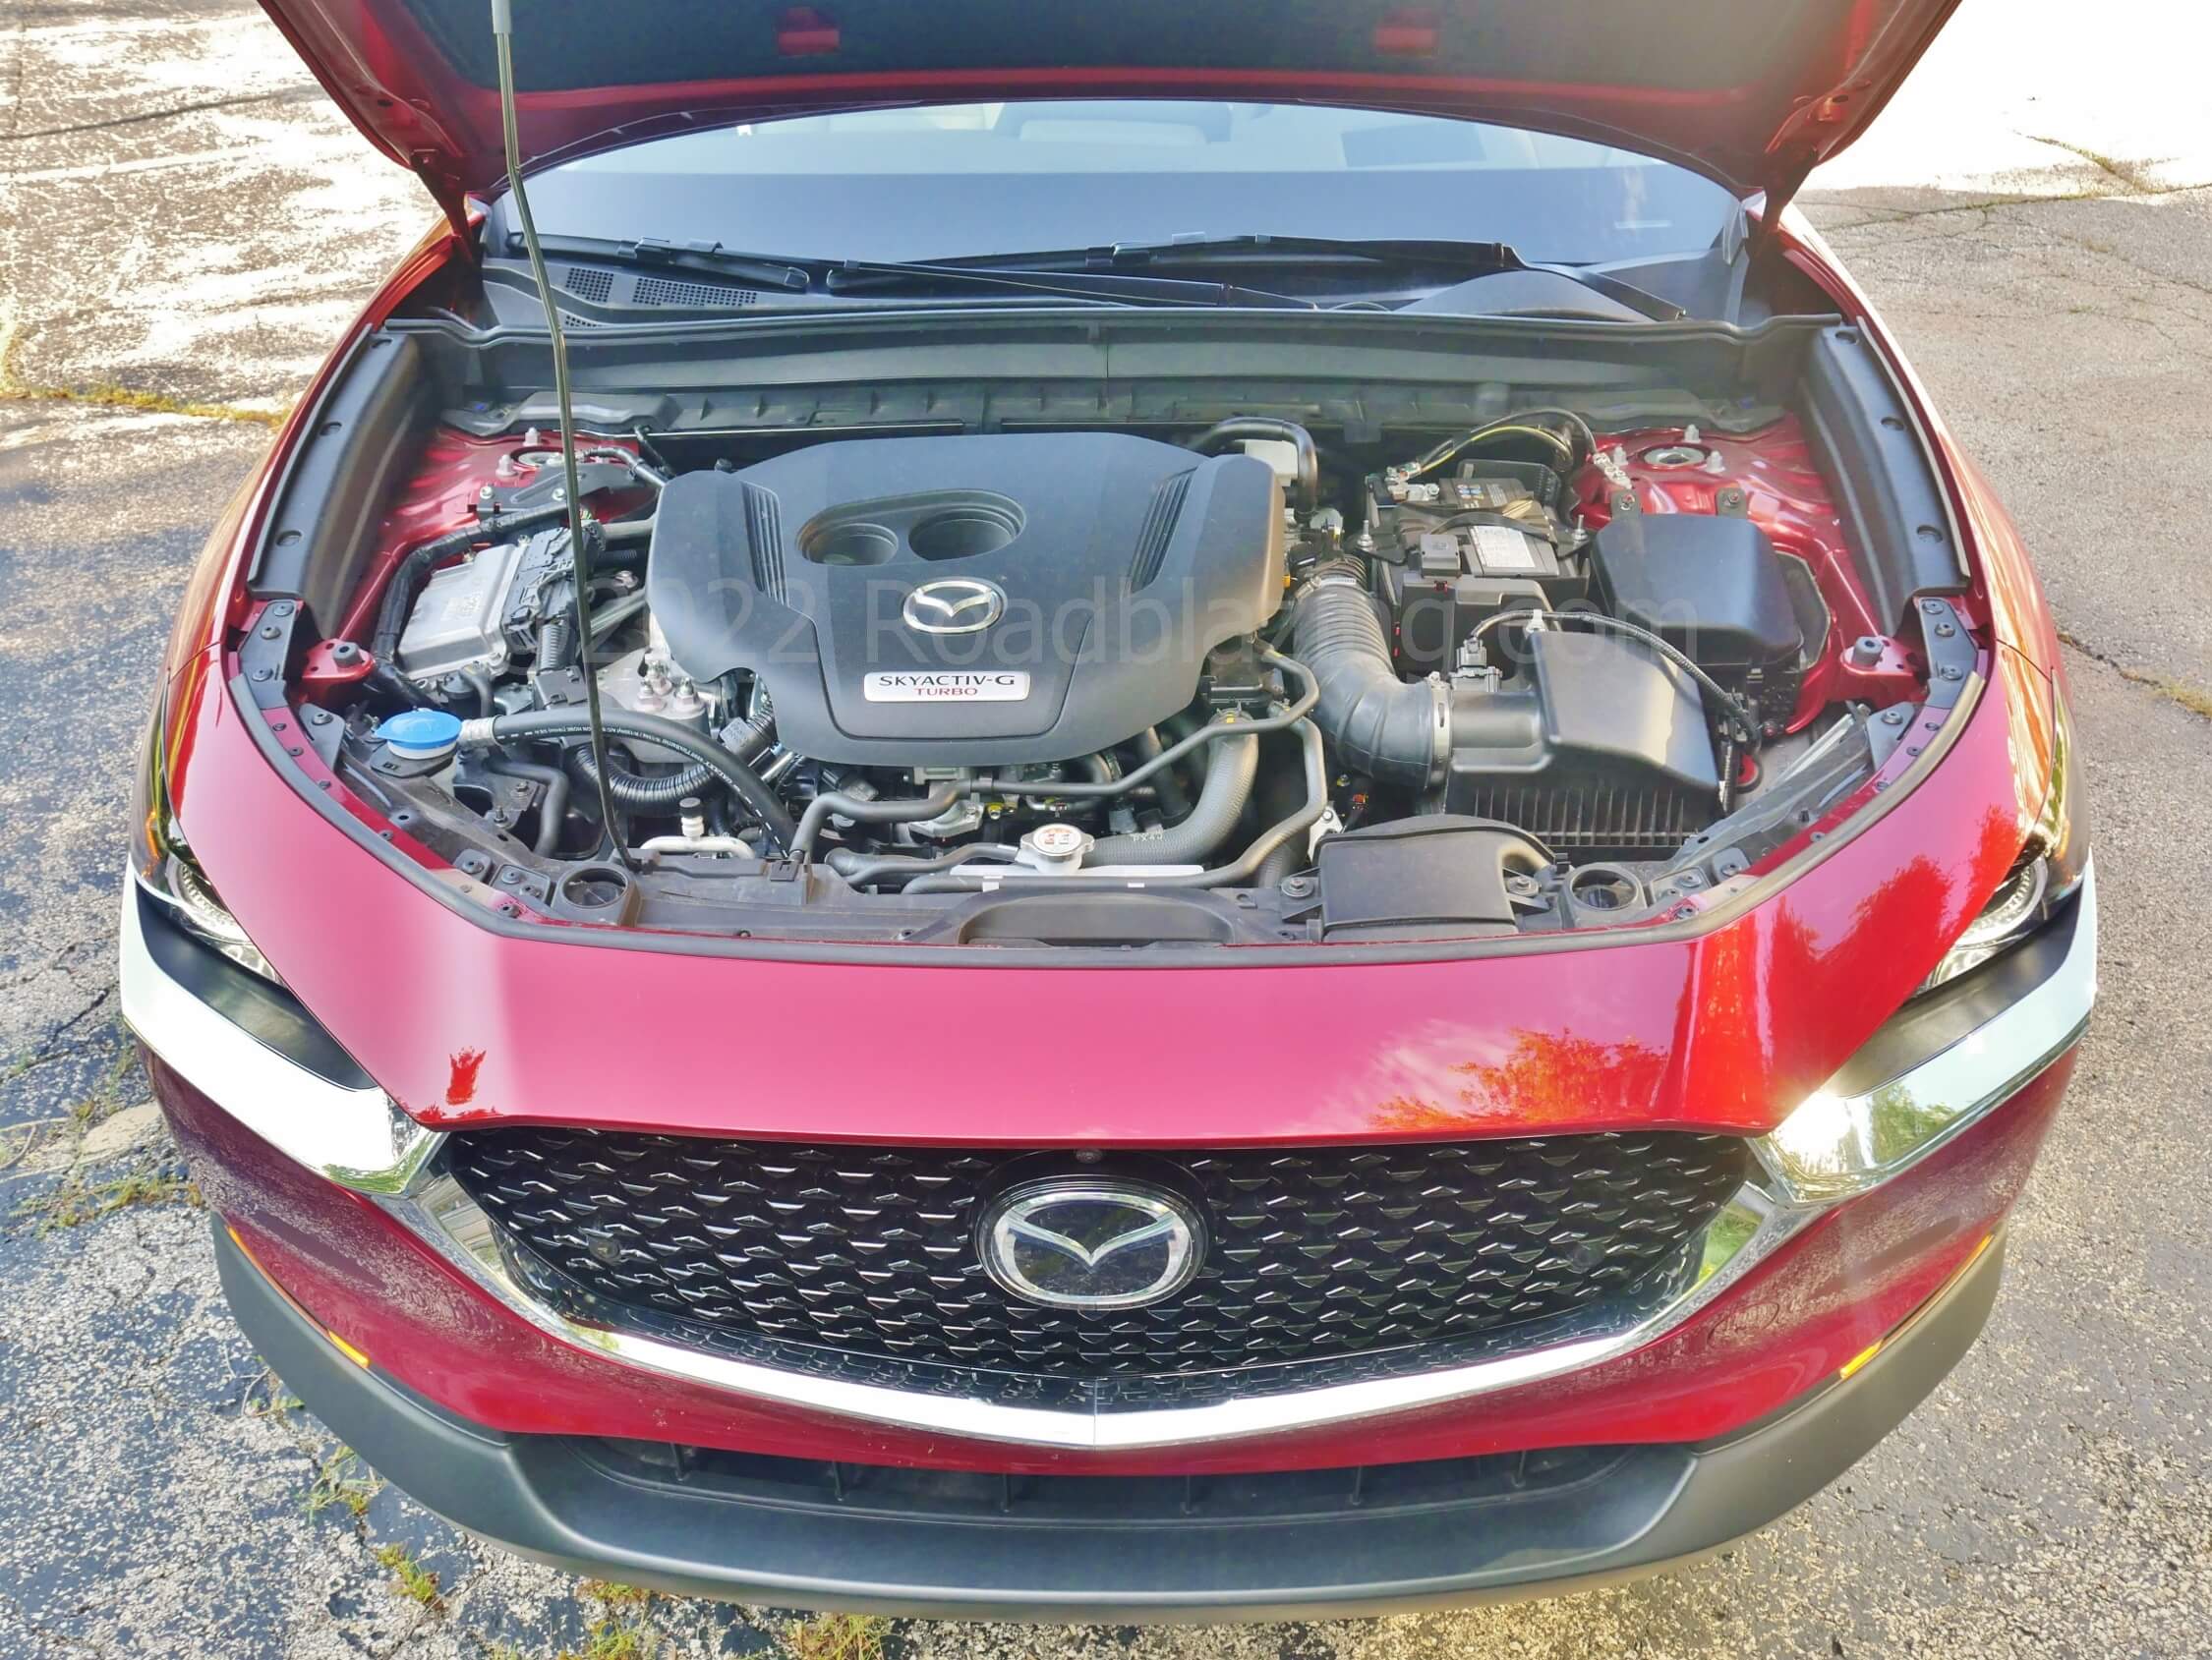 2022 Mazda CX-30 2.5 Turbo AWD: performance turbocharging application is subtle during cruising